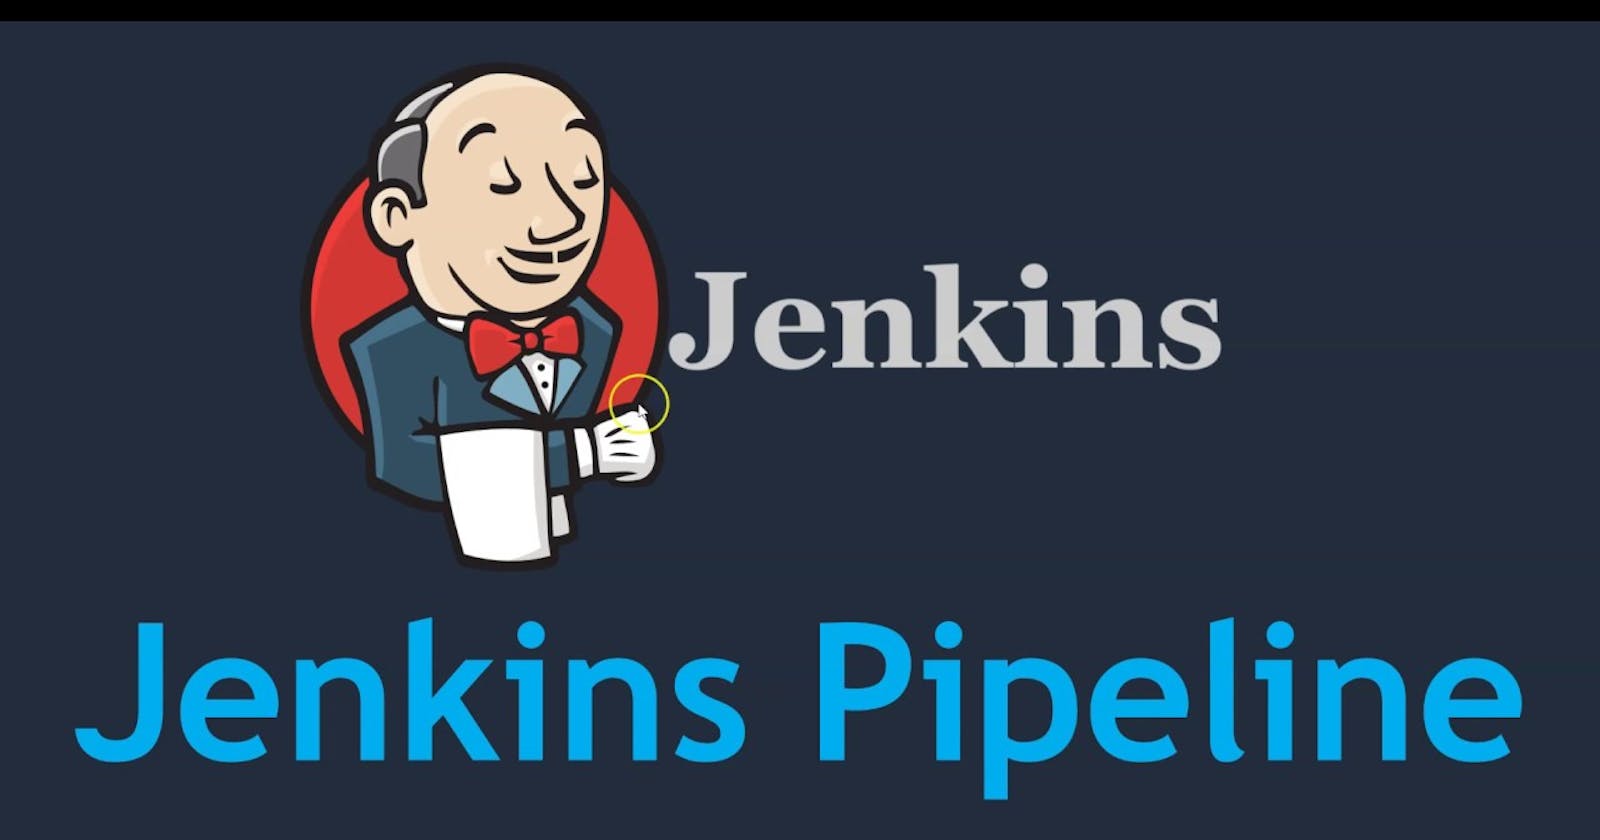 Jenkins Pipeline Project for DevOps Engineers - Part 2